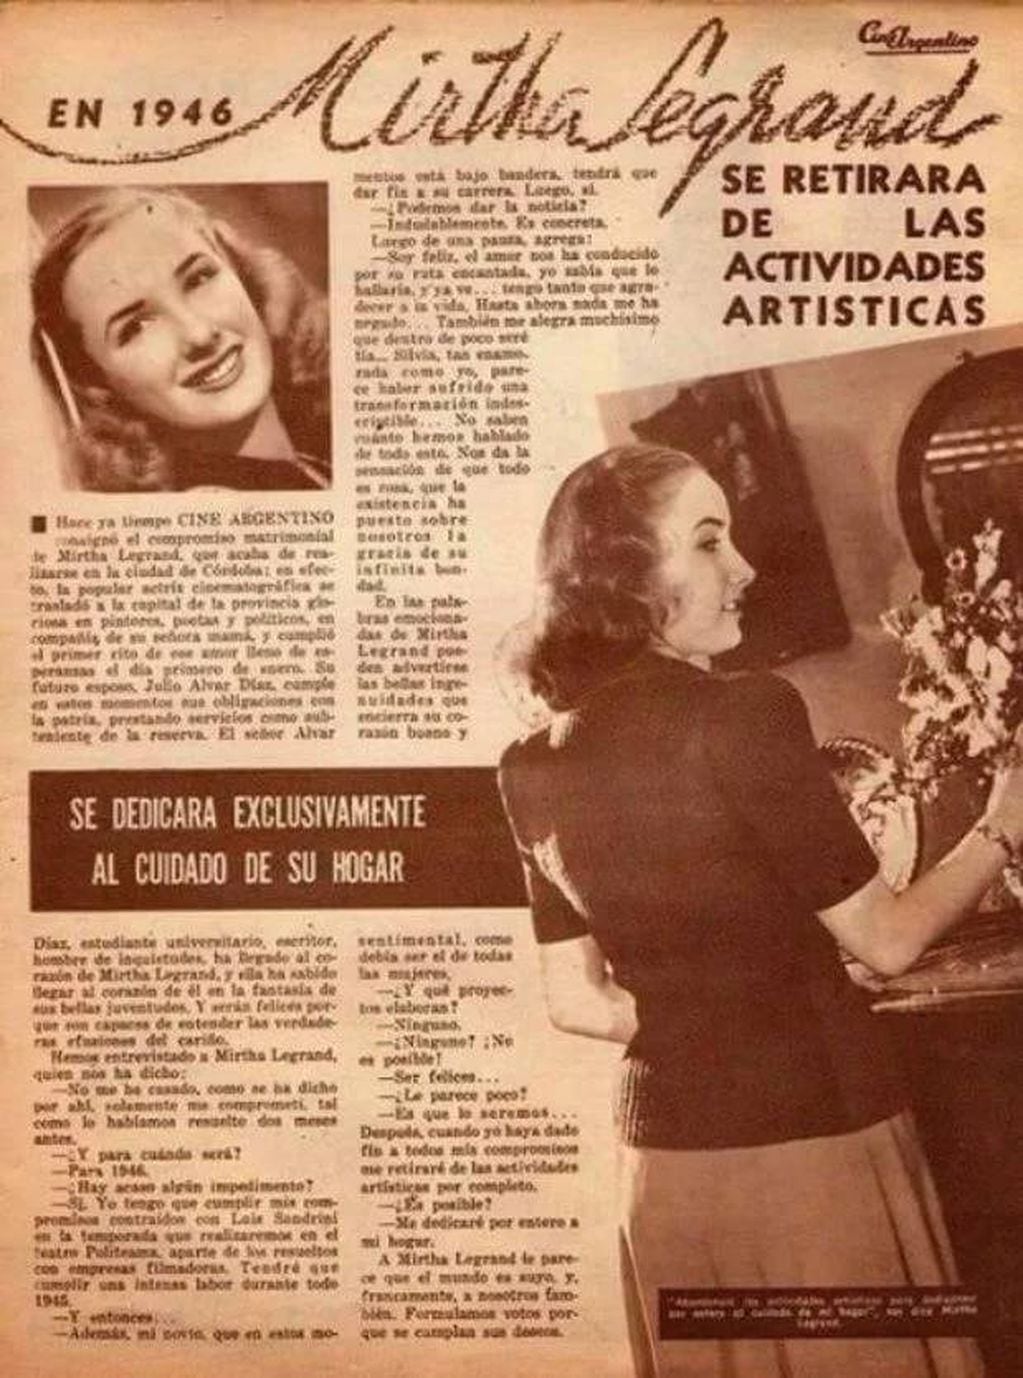 Anuncio del retiro de Mirtha Legrand en 1946.